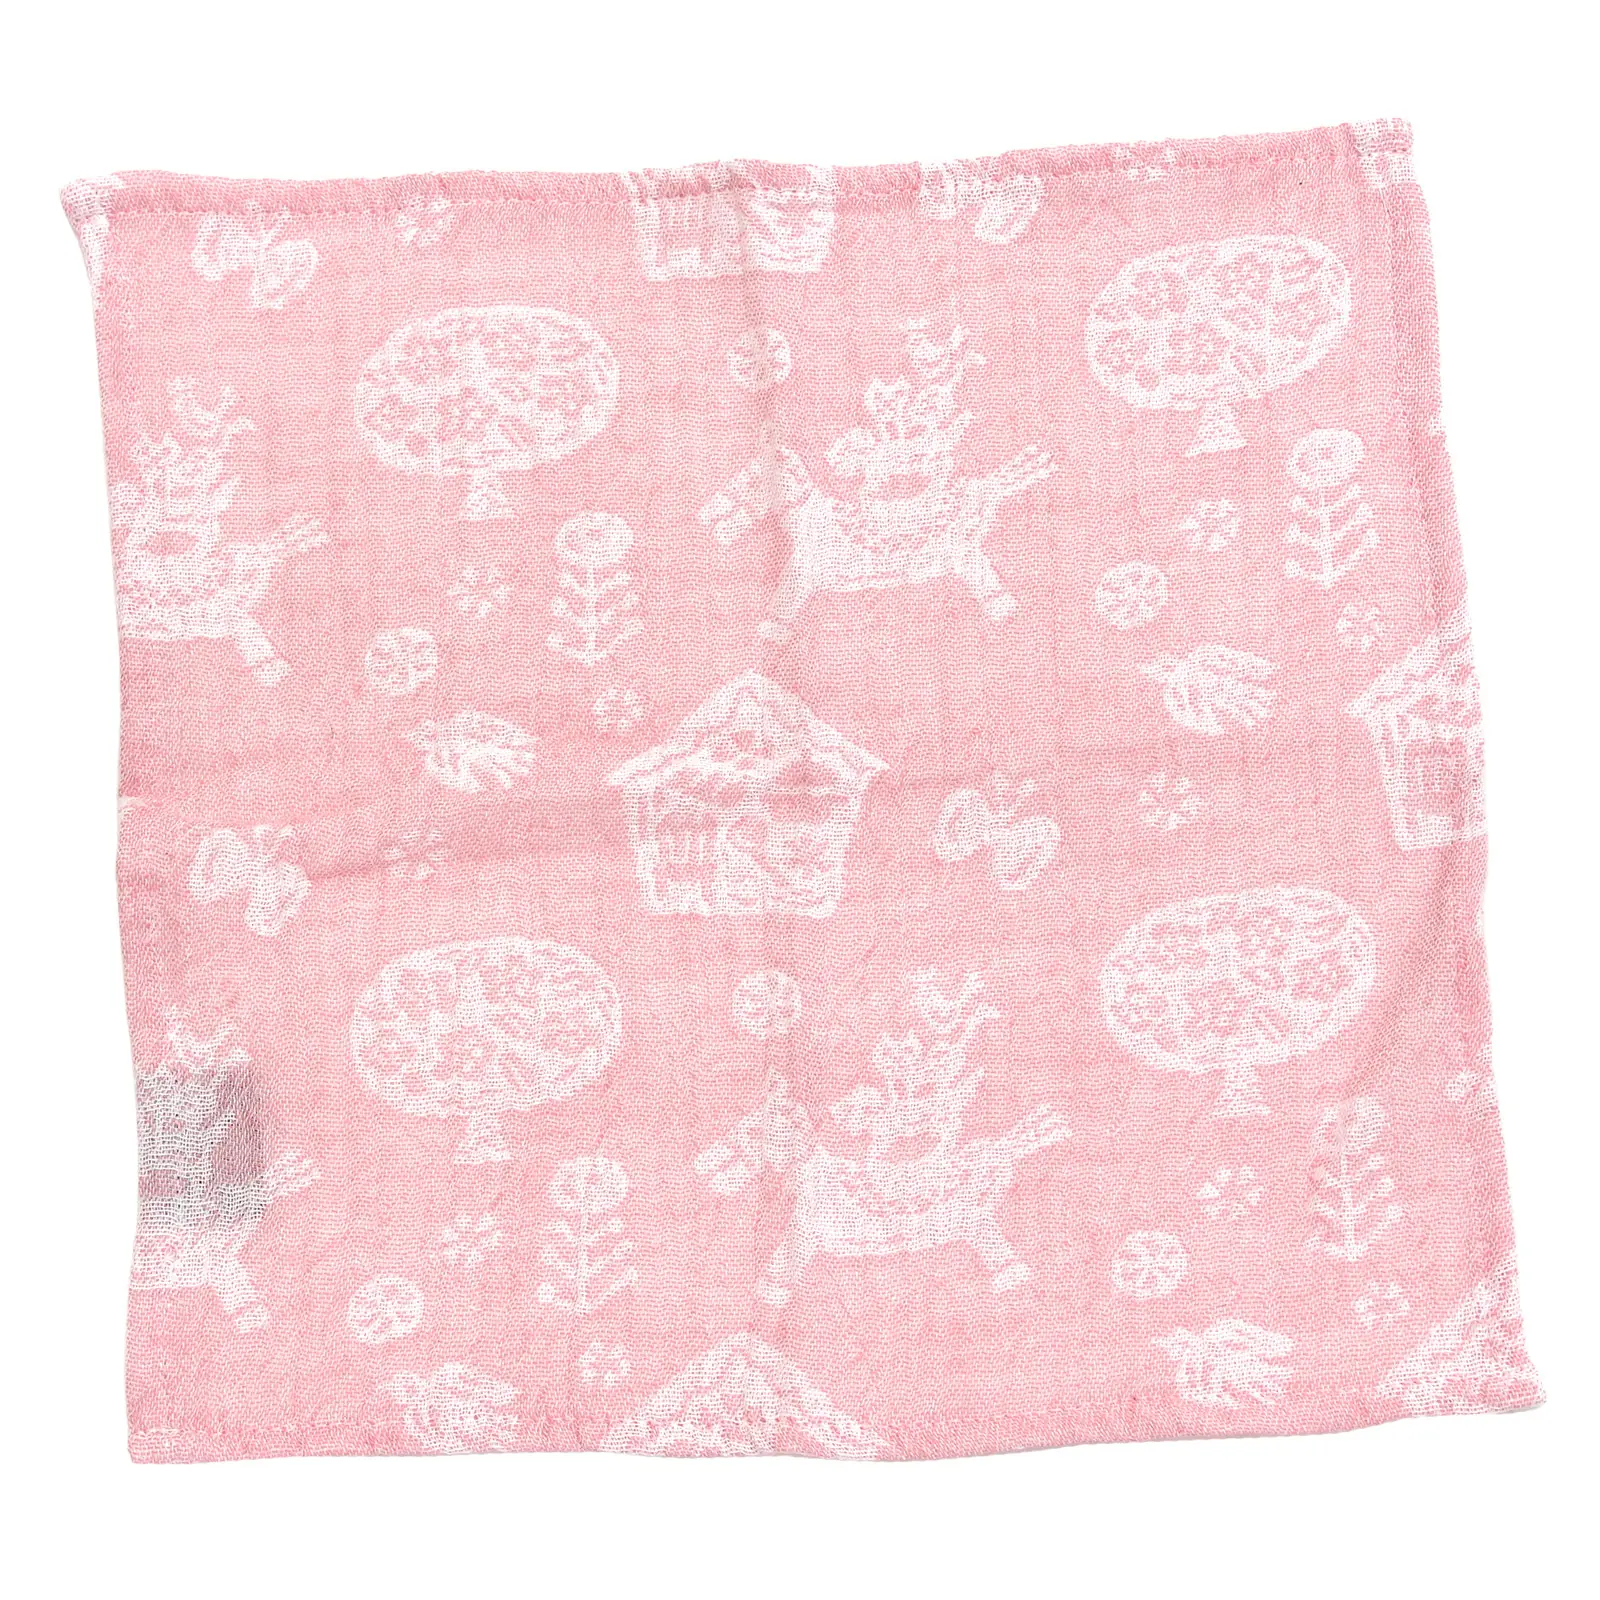 2 layer gauze baby washcloth 29 * 29cm (11.4*11.4inc) 100% cotton made in Japan gauze fabric horse pink design